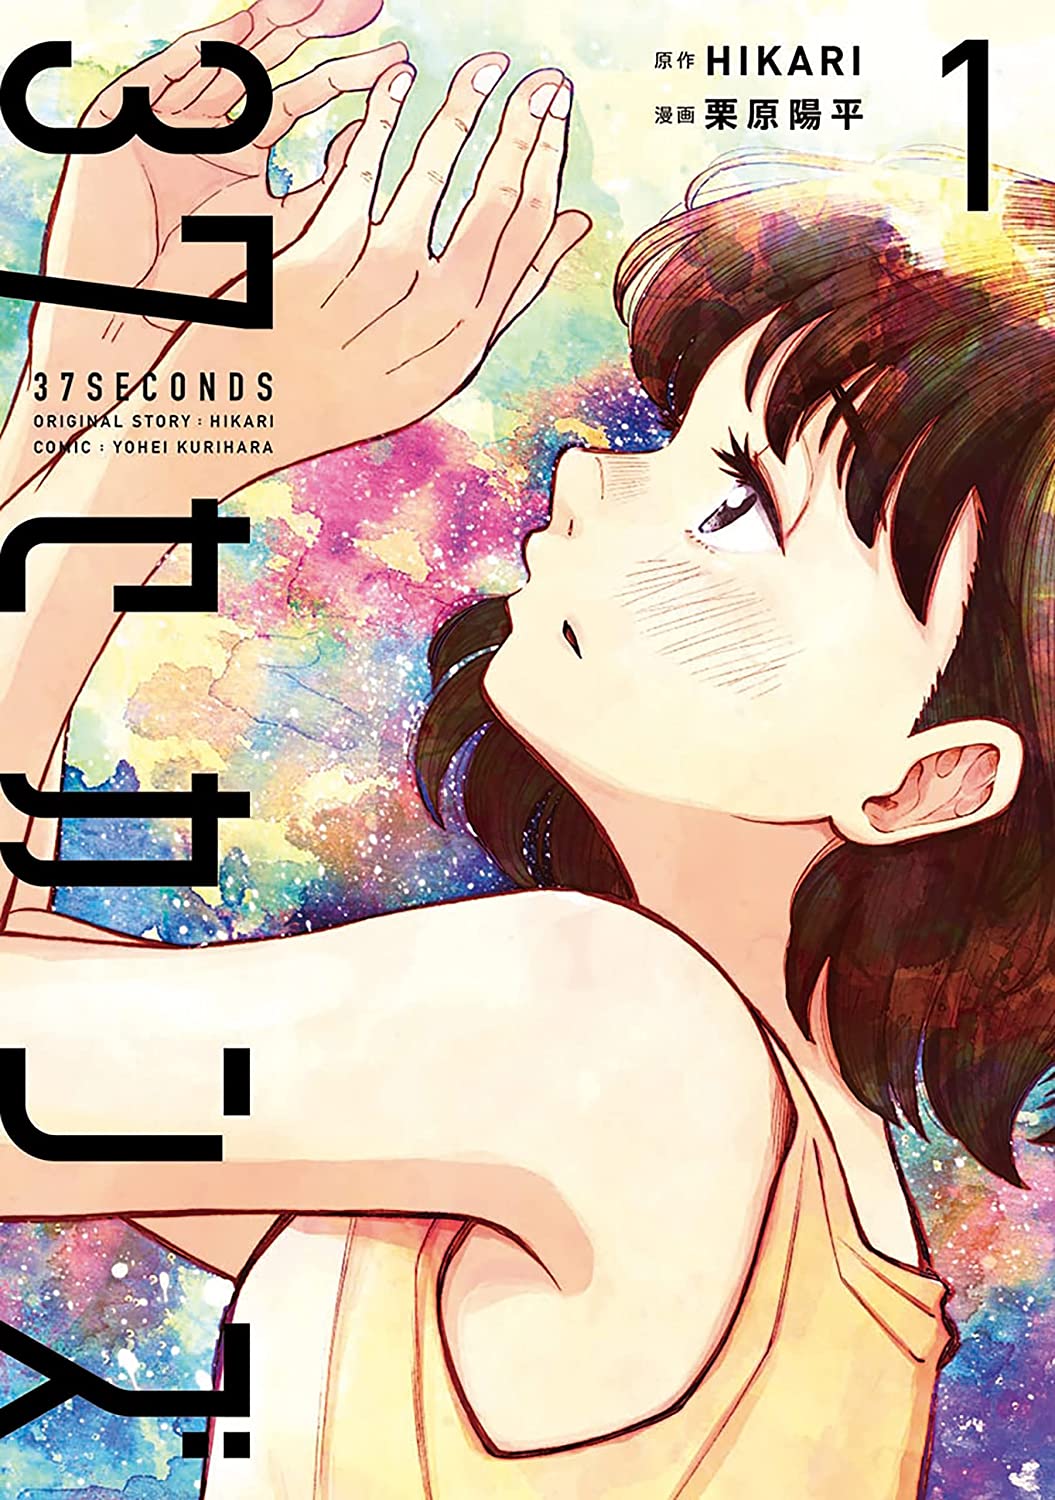 Manga Mogura RE (Manga & Anime News) on X: New Blue Period